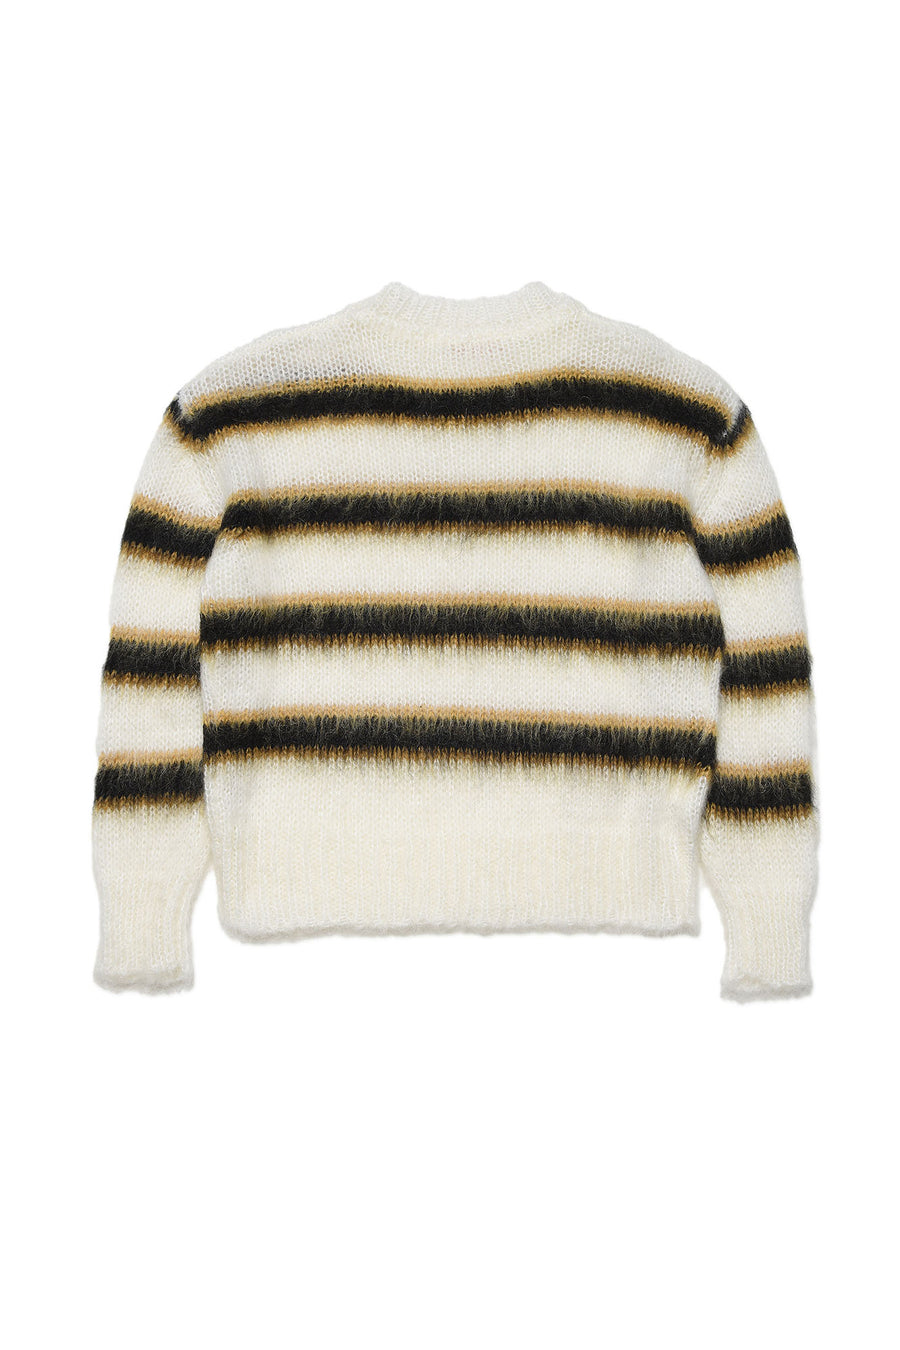 Striped cream knit sweater by Marni